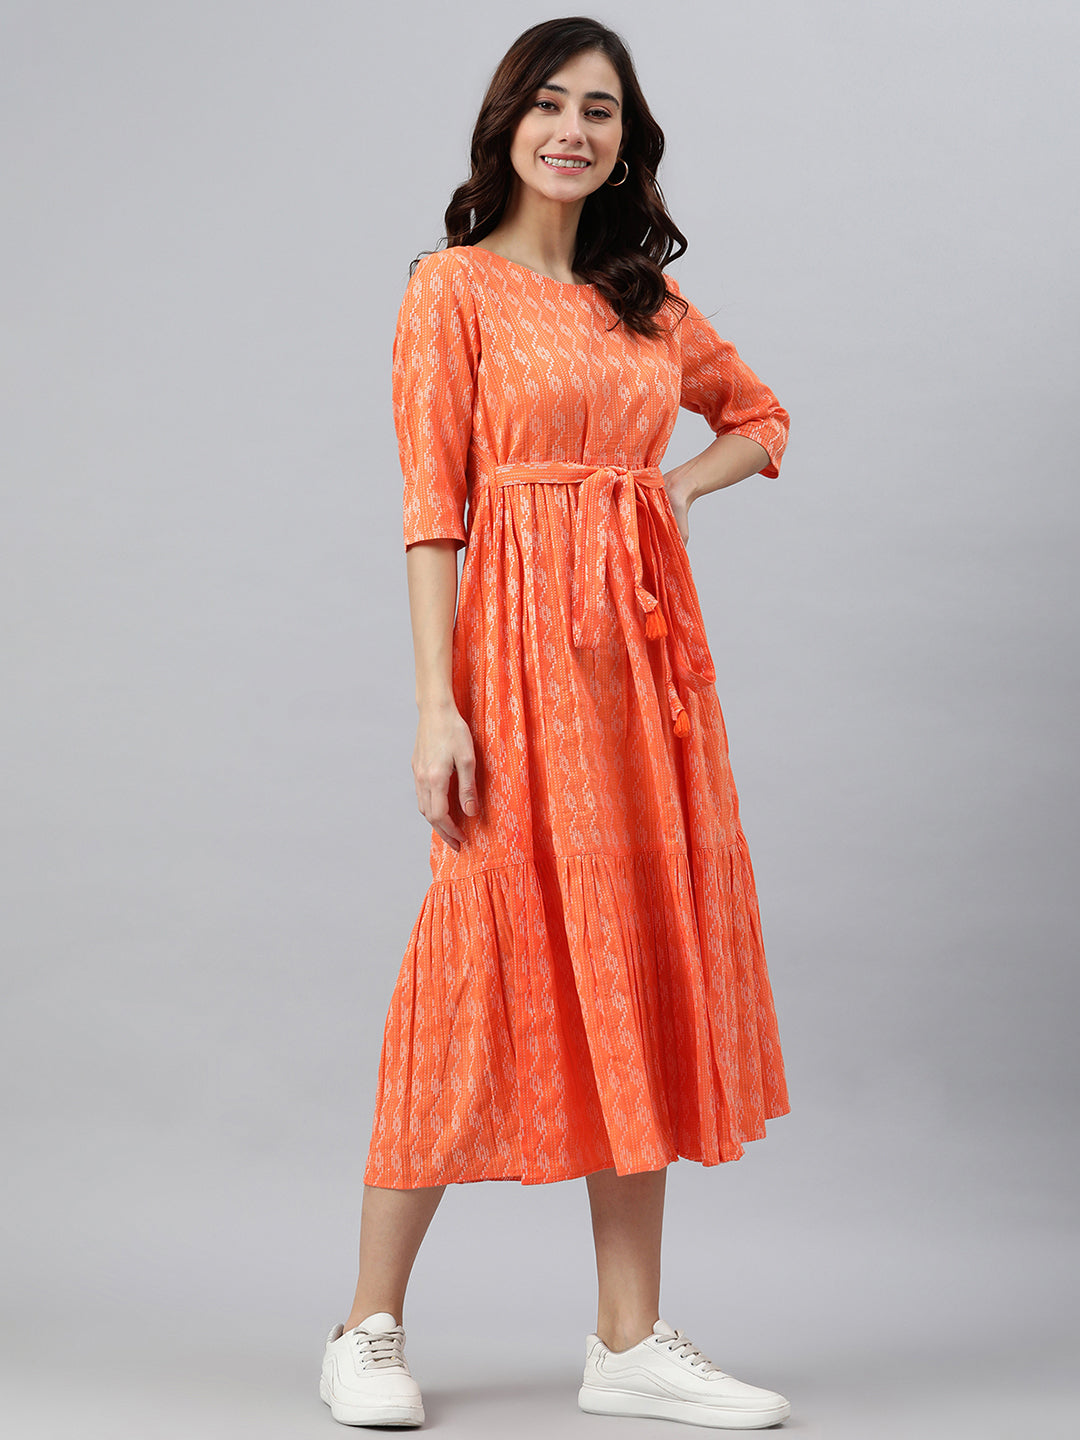 Women's Woven Design Orange Cotton Dress - Janasya